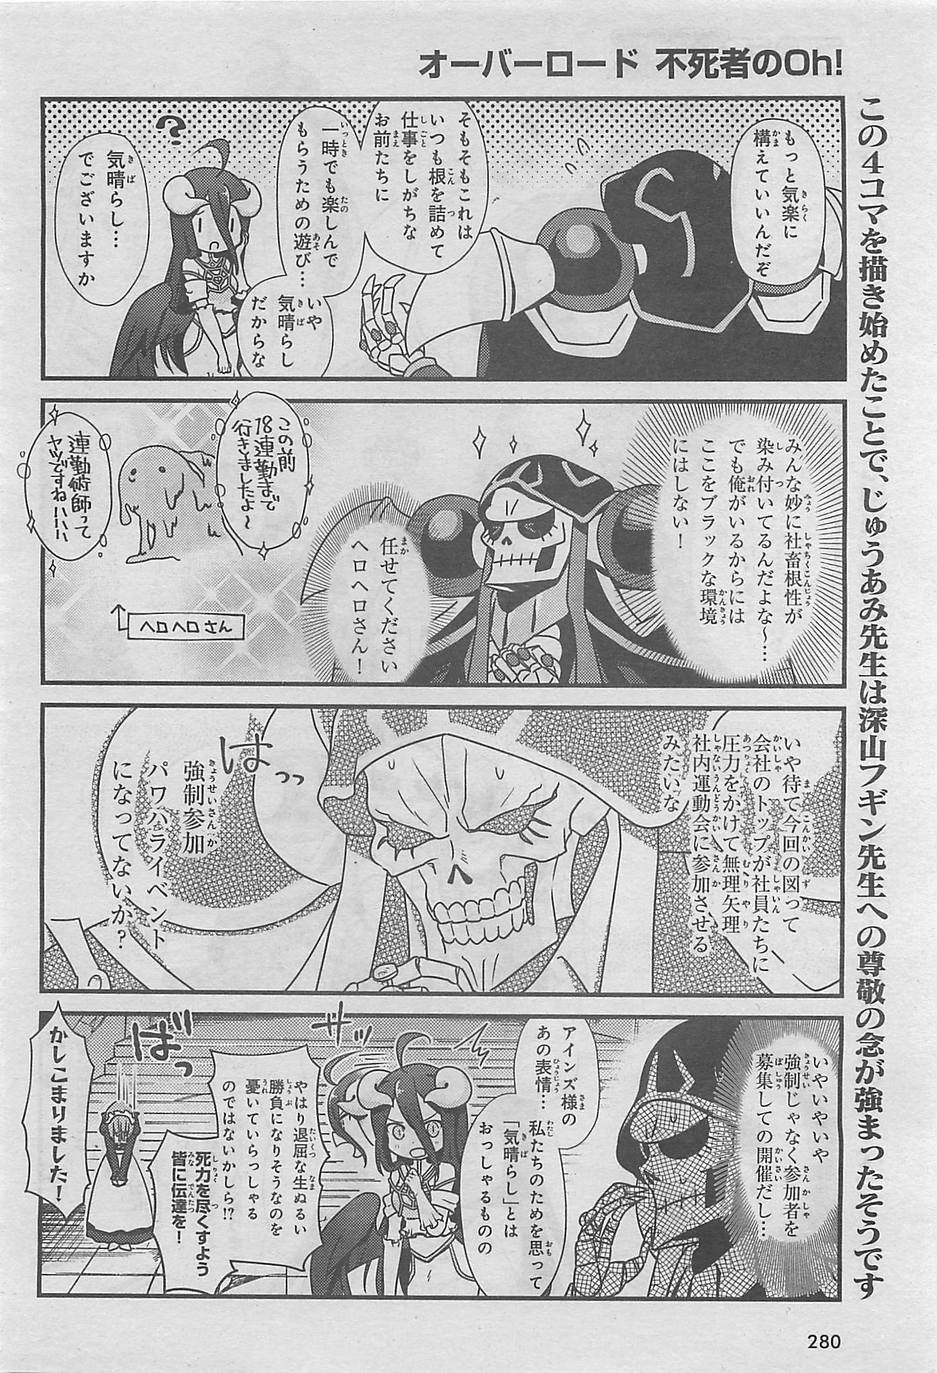 Overlord-Fushisha-no-Oh - Chapter 01 - Page 4